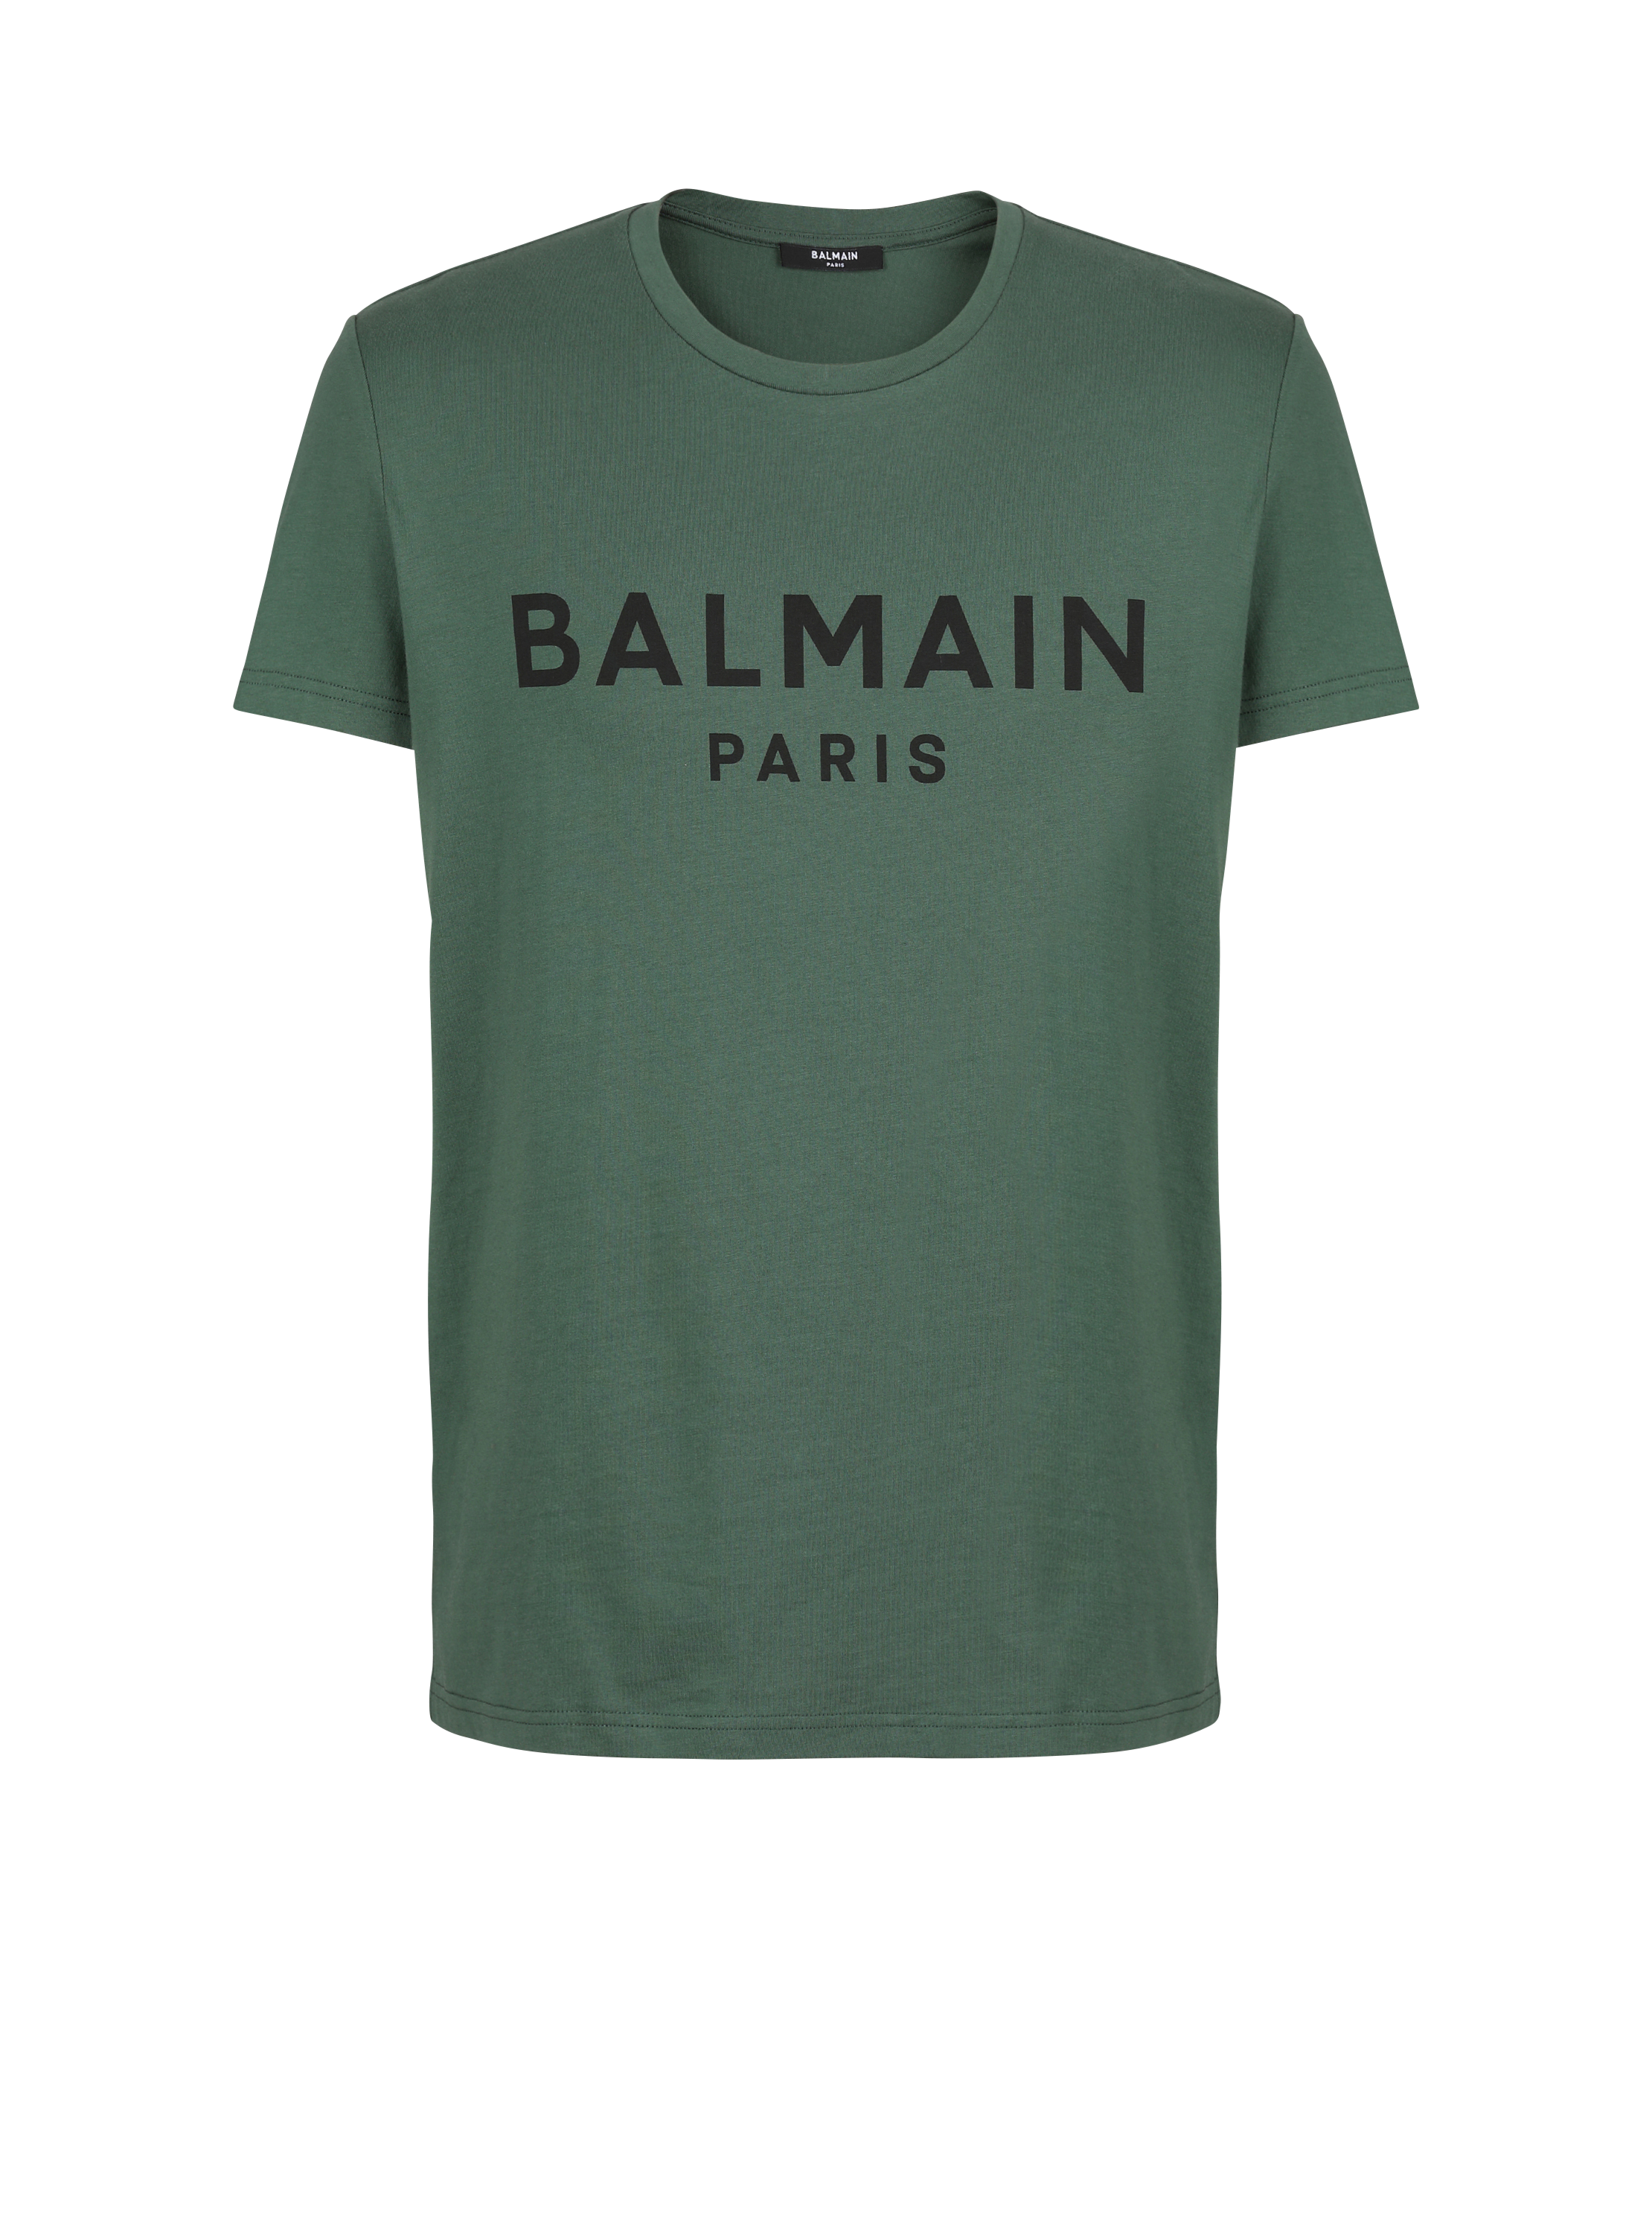 T-Shirt aus Baumwolle mit „Balmain Paris“-Logo-Print, grün, hi-res